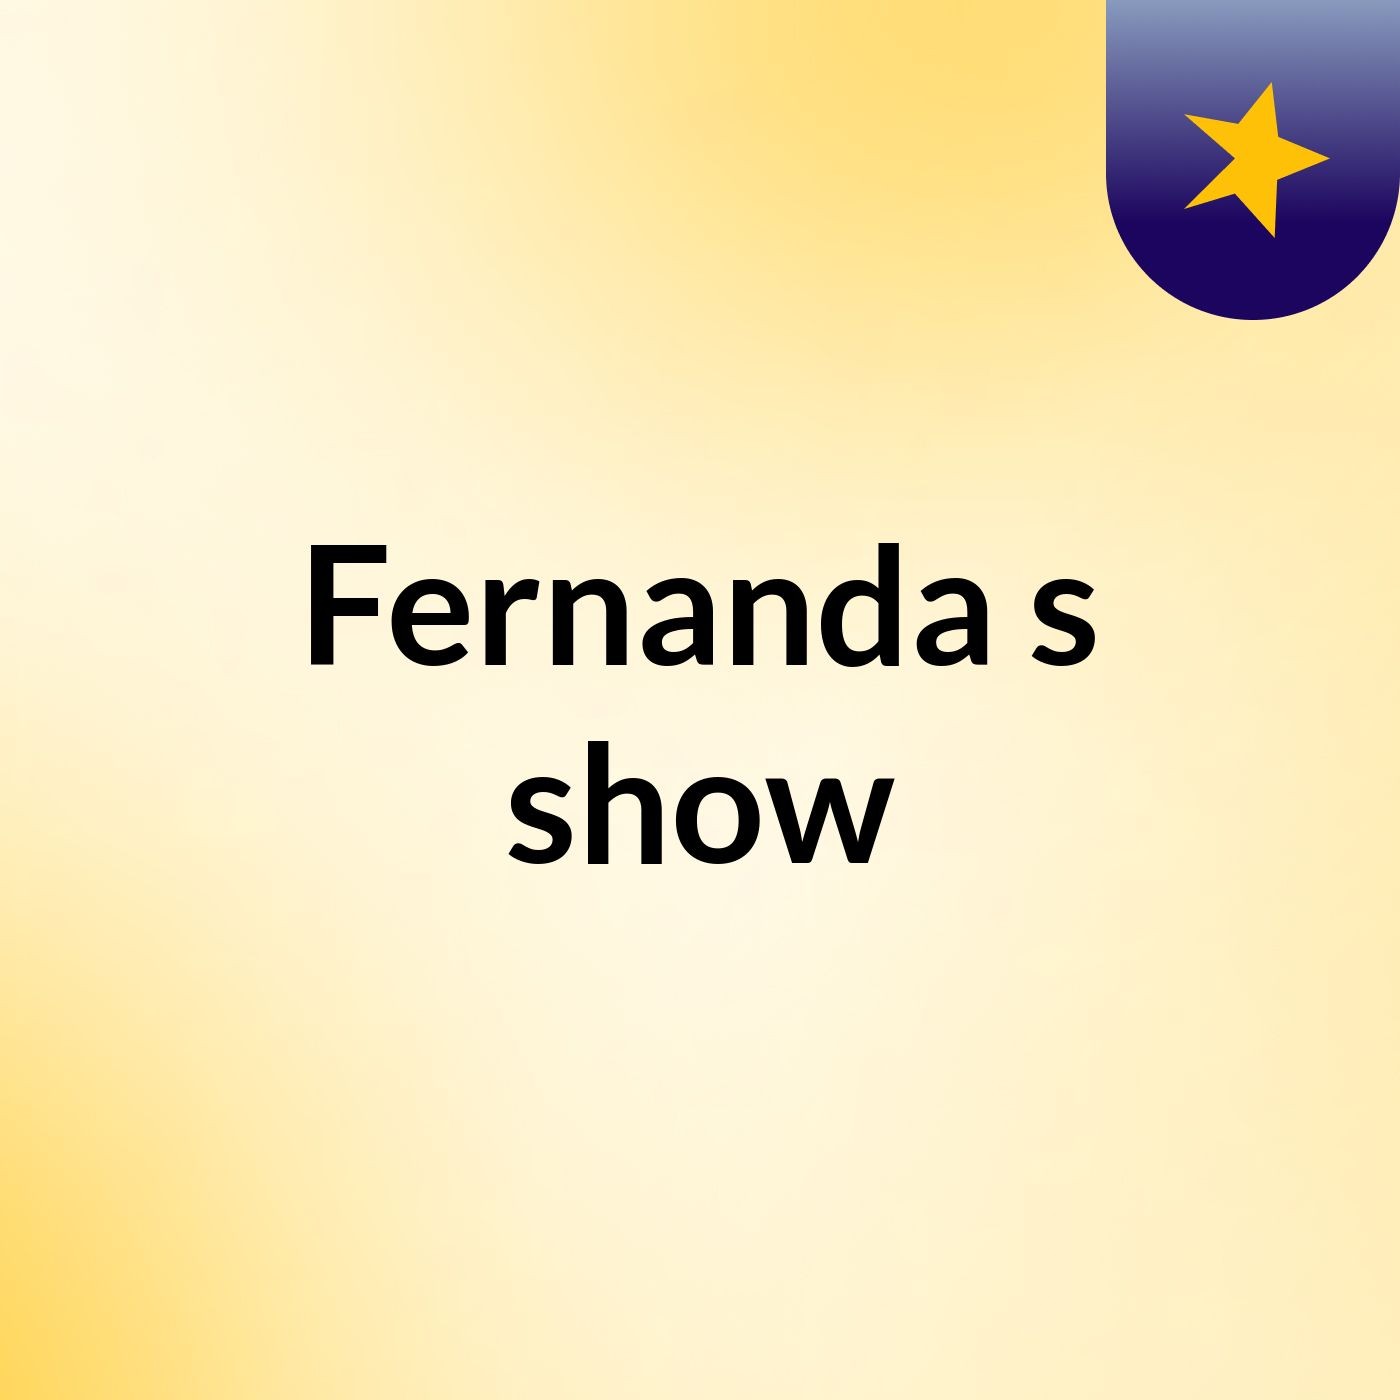 Fernanda's show